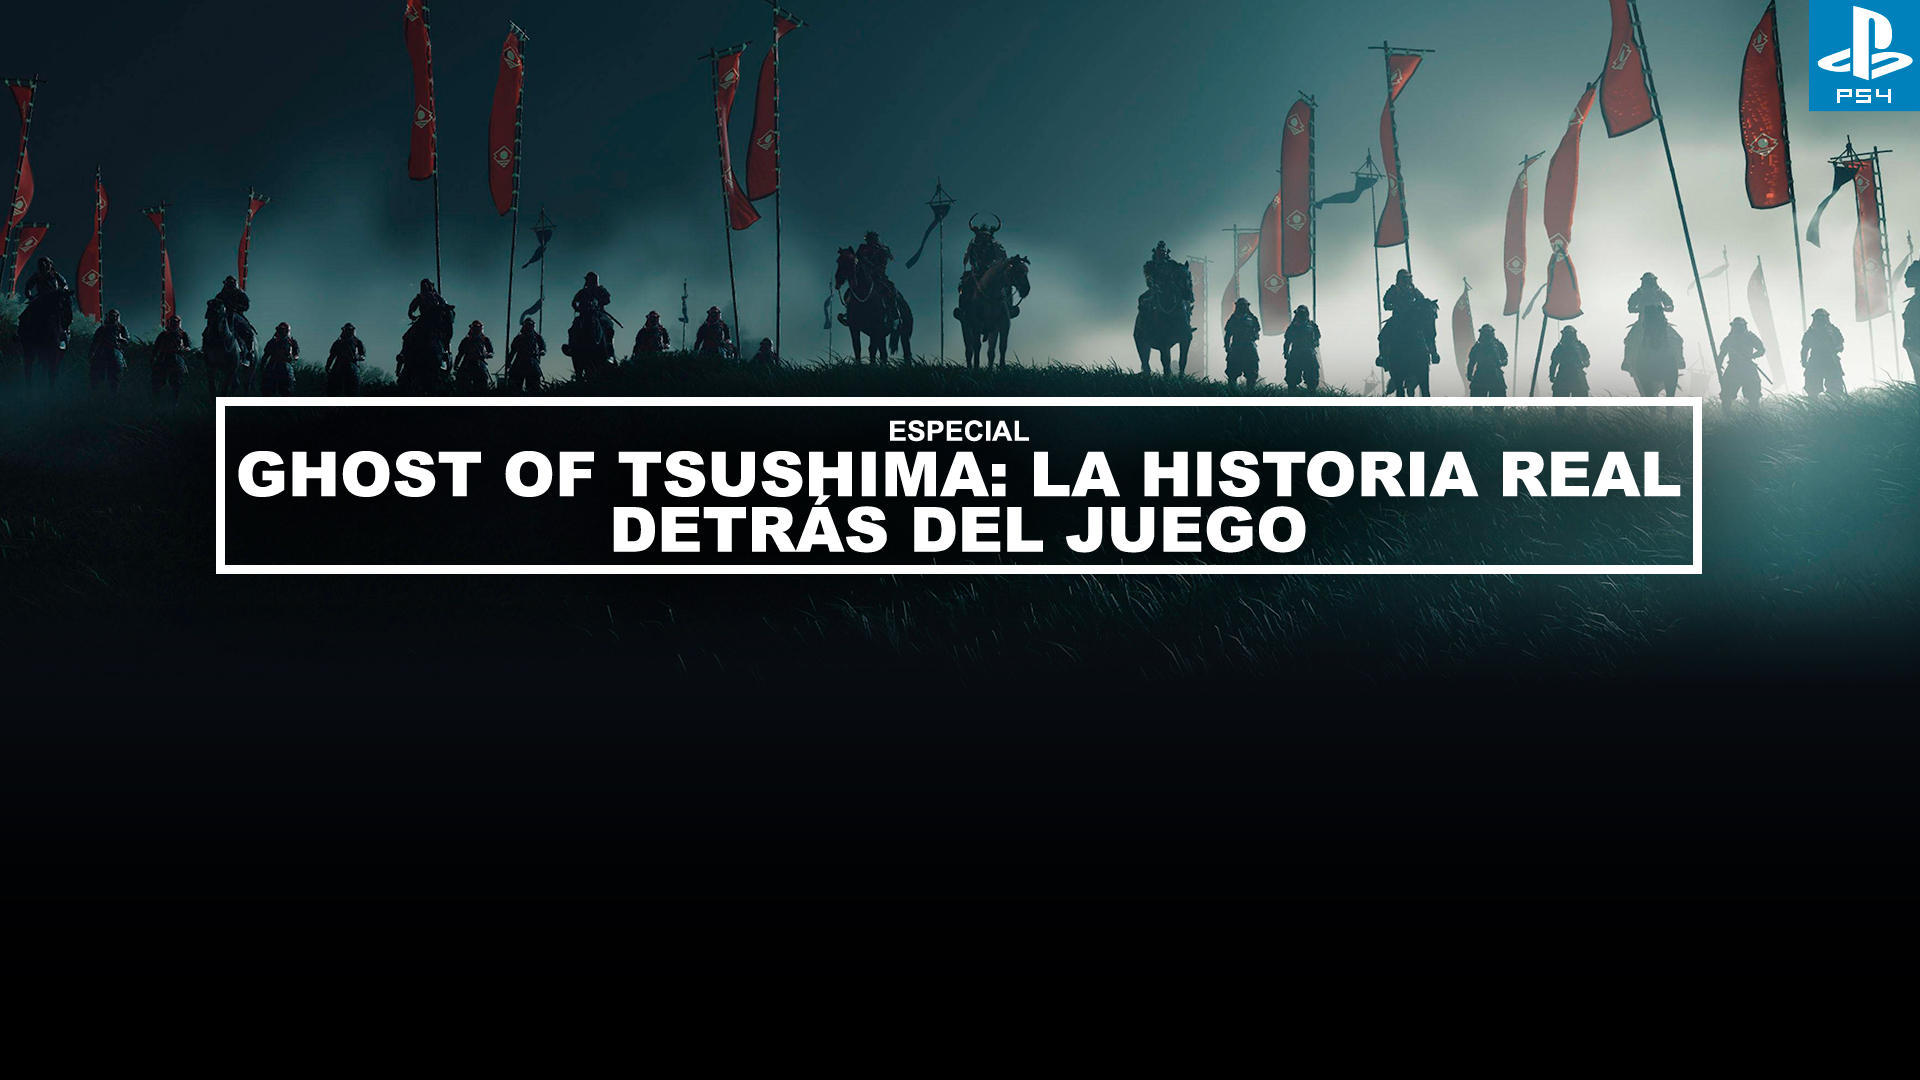 Ghost of Tsushima: La historia real detrs del juego